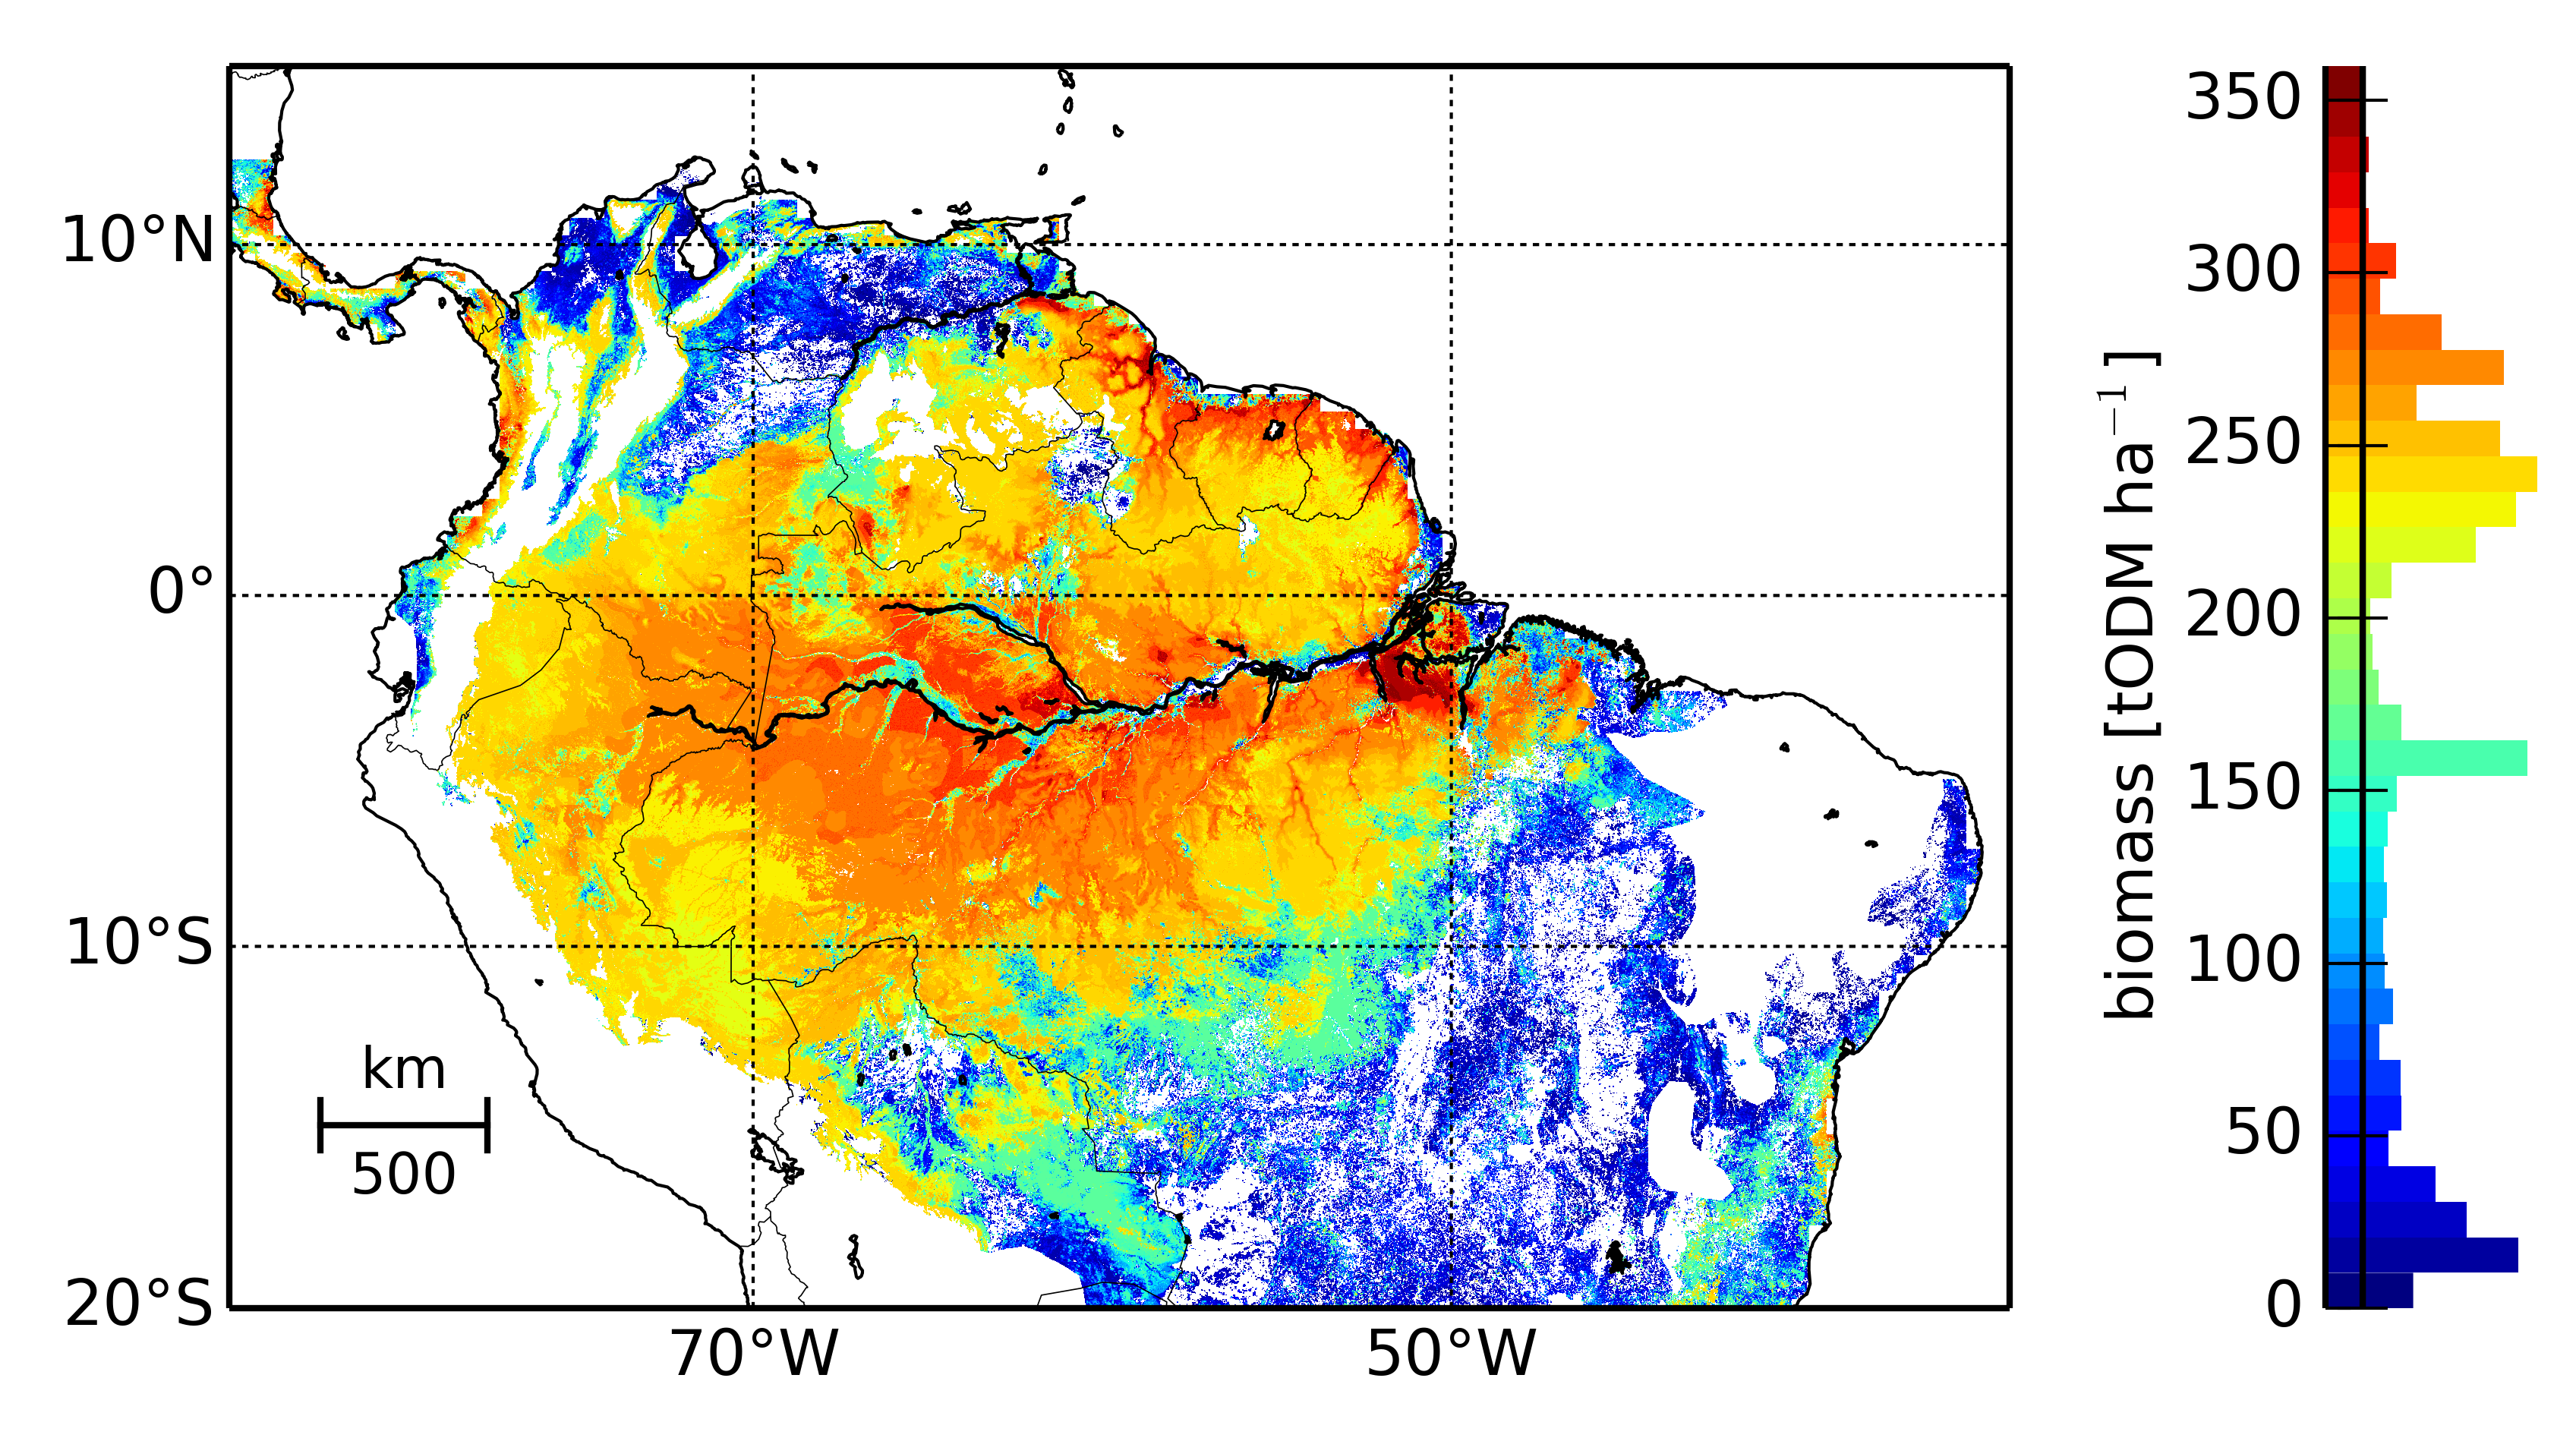 Preliminary biomass map of the Amazon rainforest